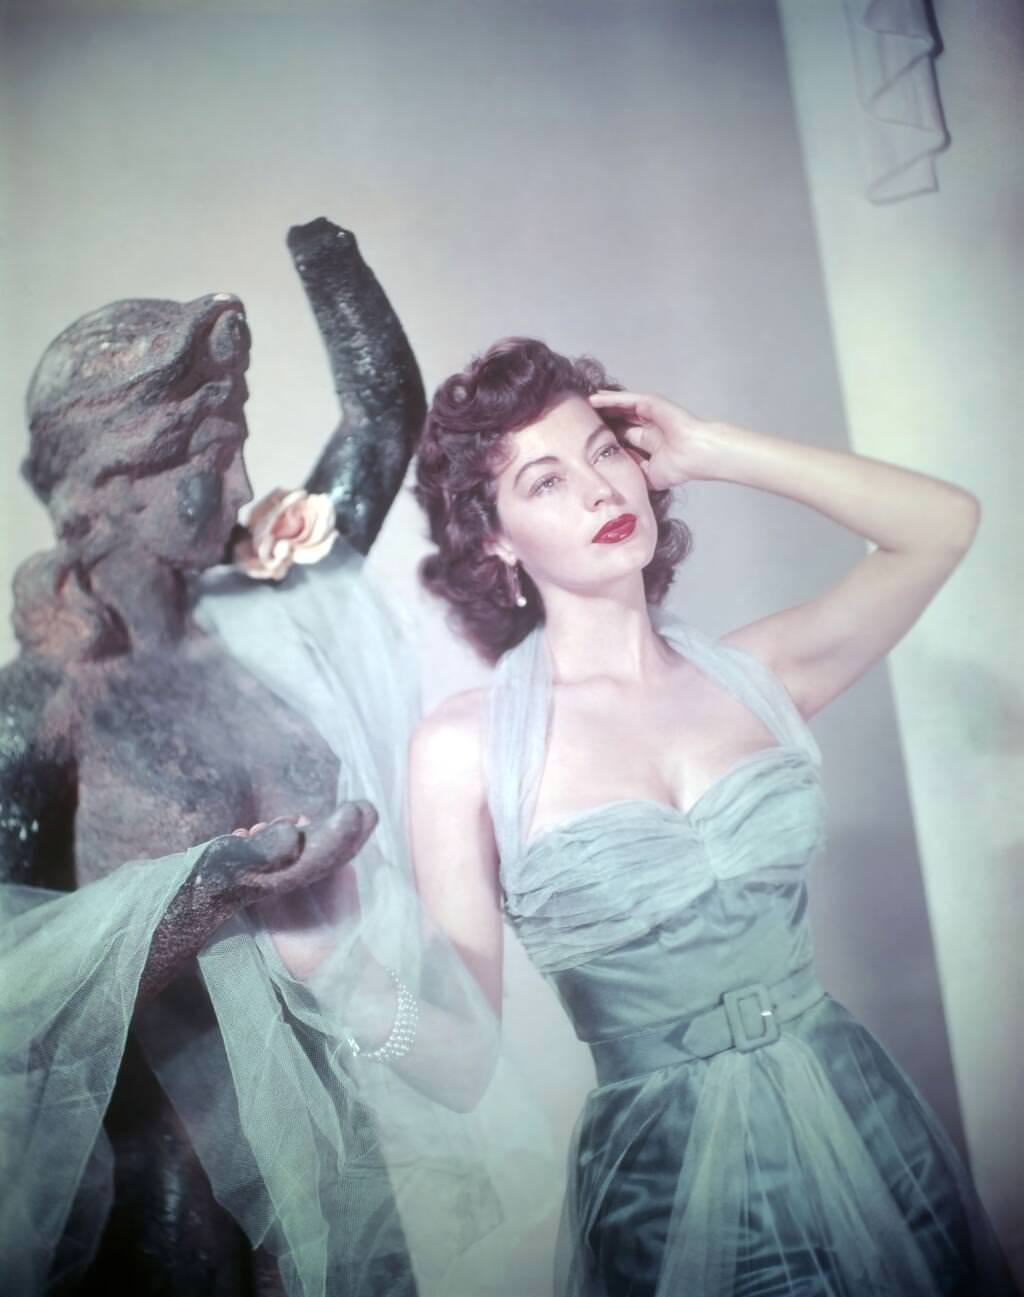 Ava Gardner in "Pandora and the Flying Dutchman," 1951